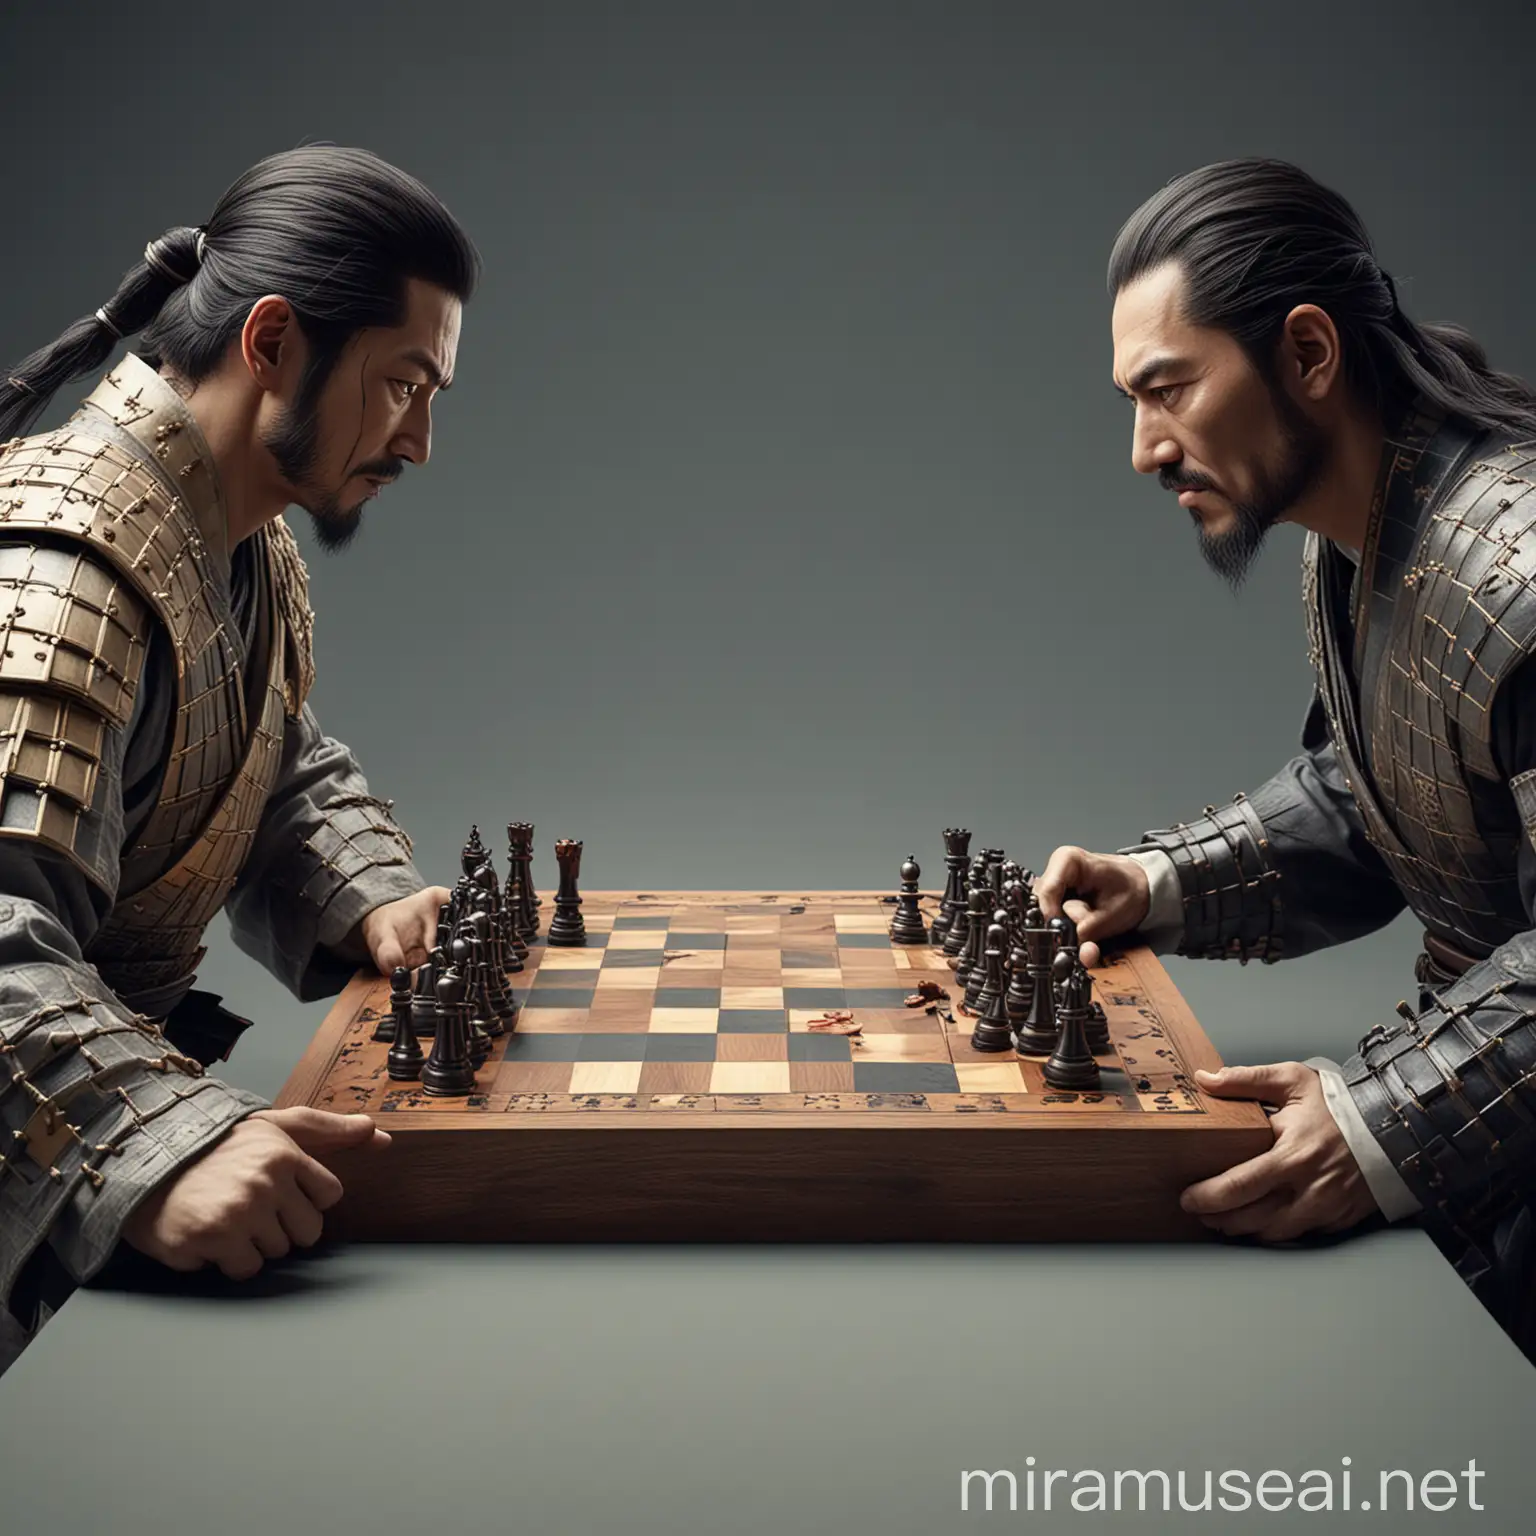 Samurai Warrior and Businessman Engage in Strategic Chess Battle